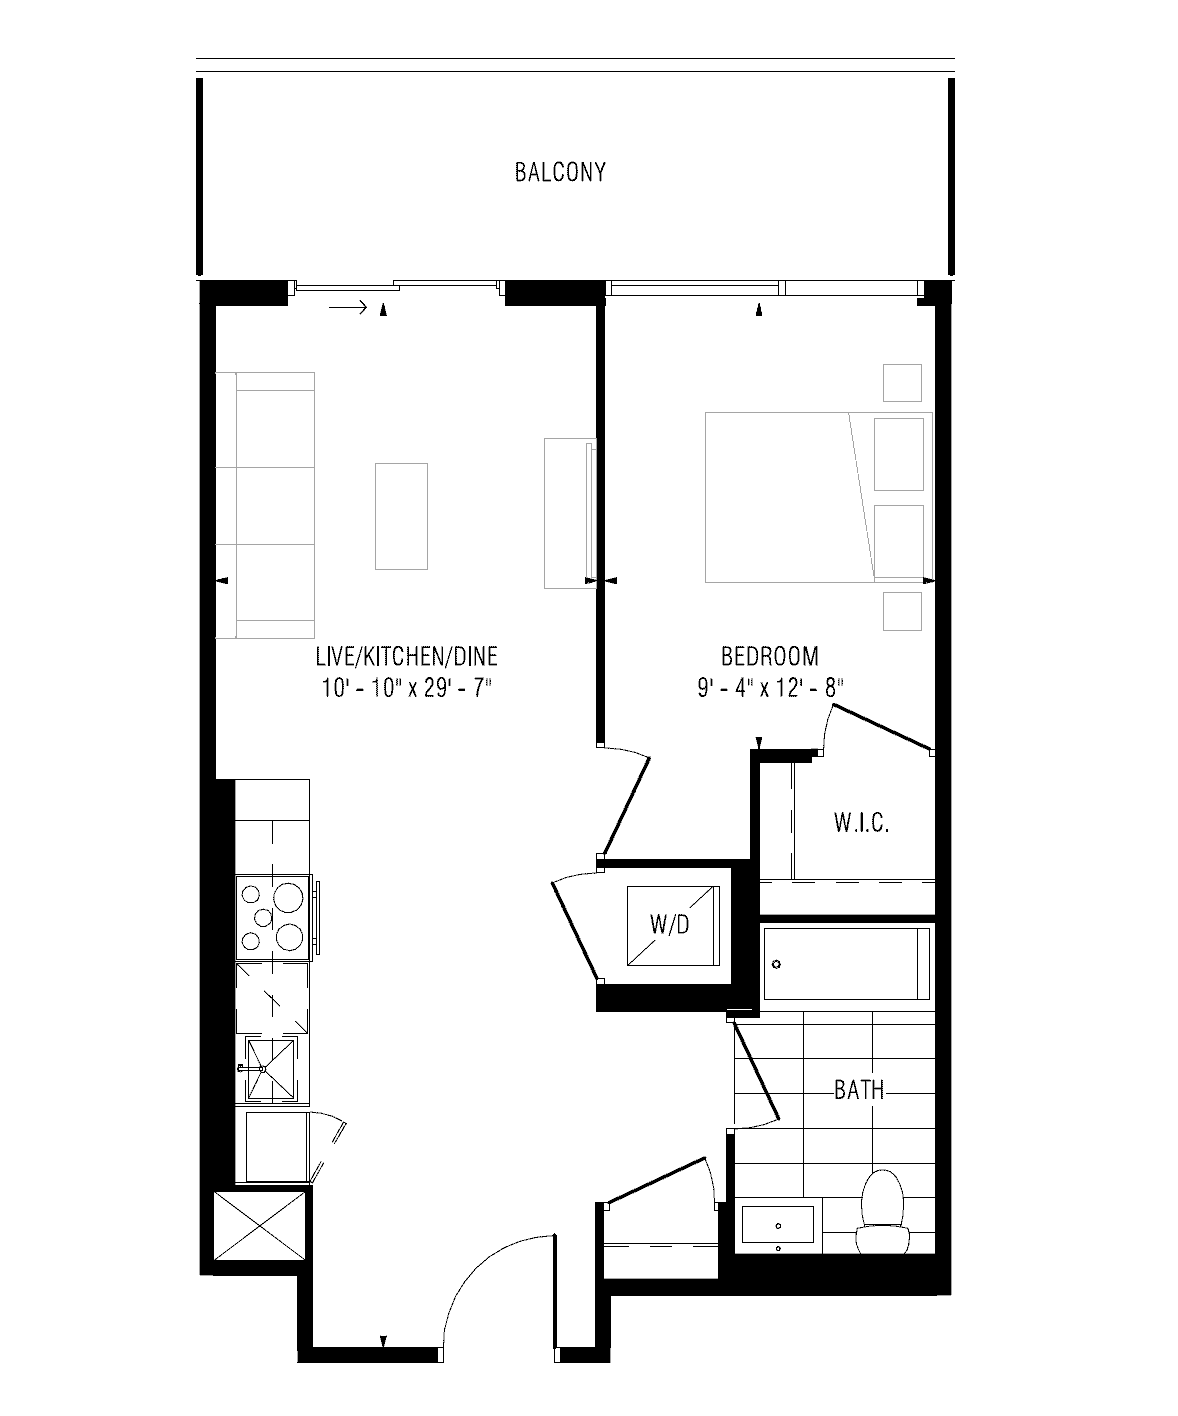 W804-W4004 floor plan